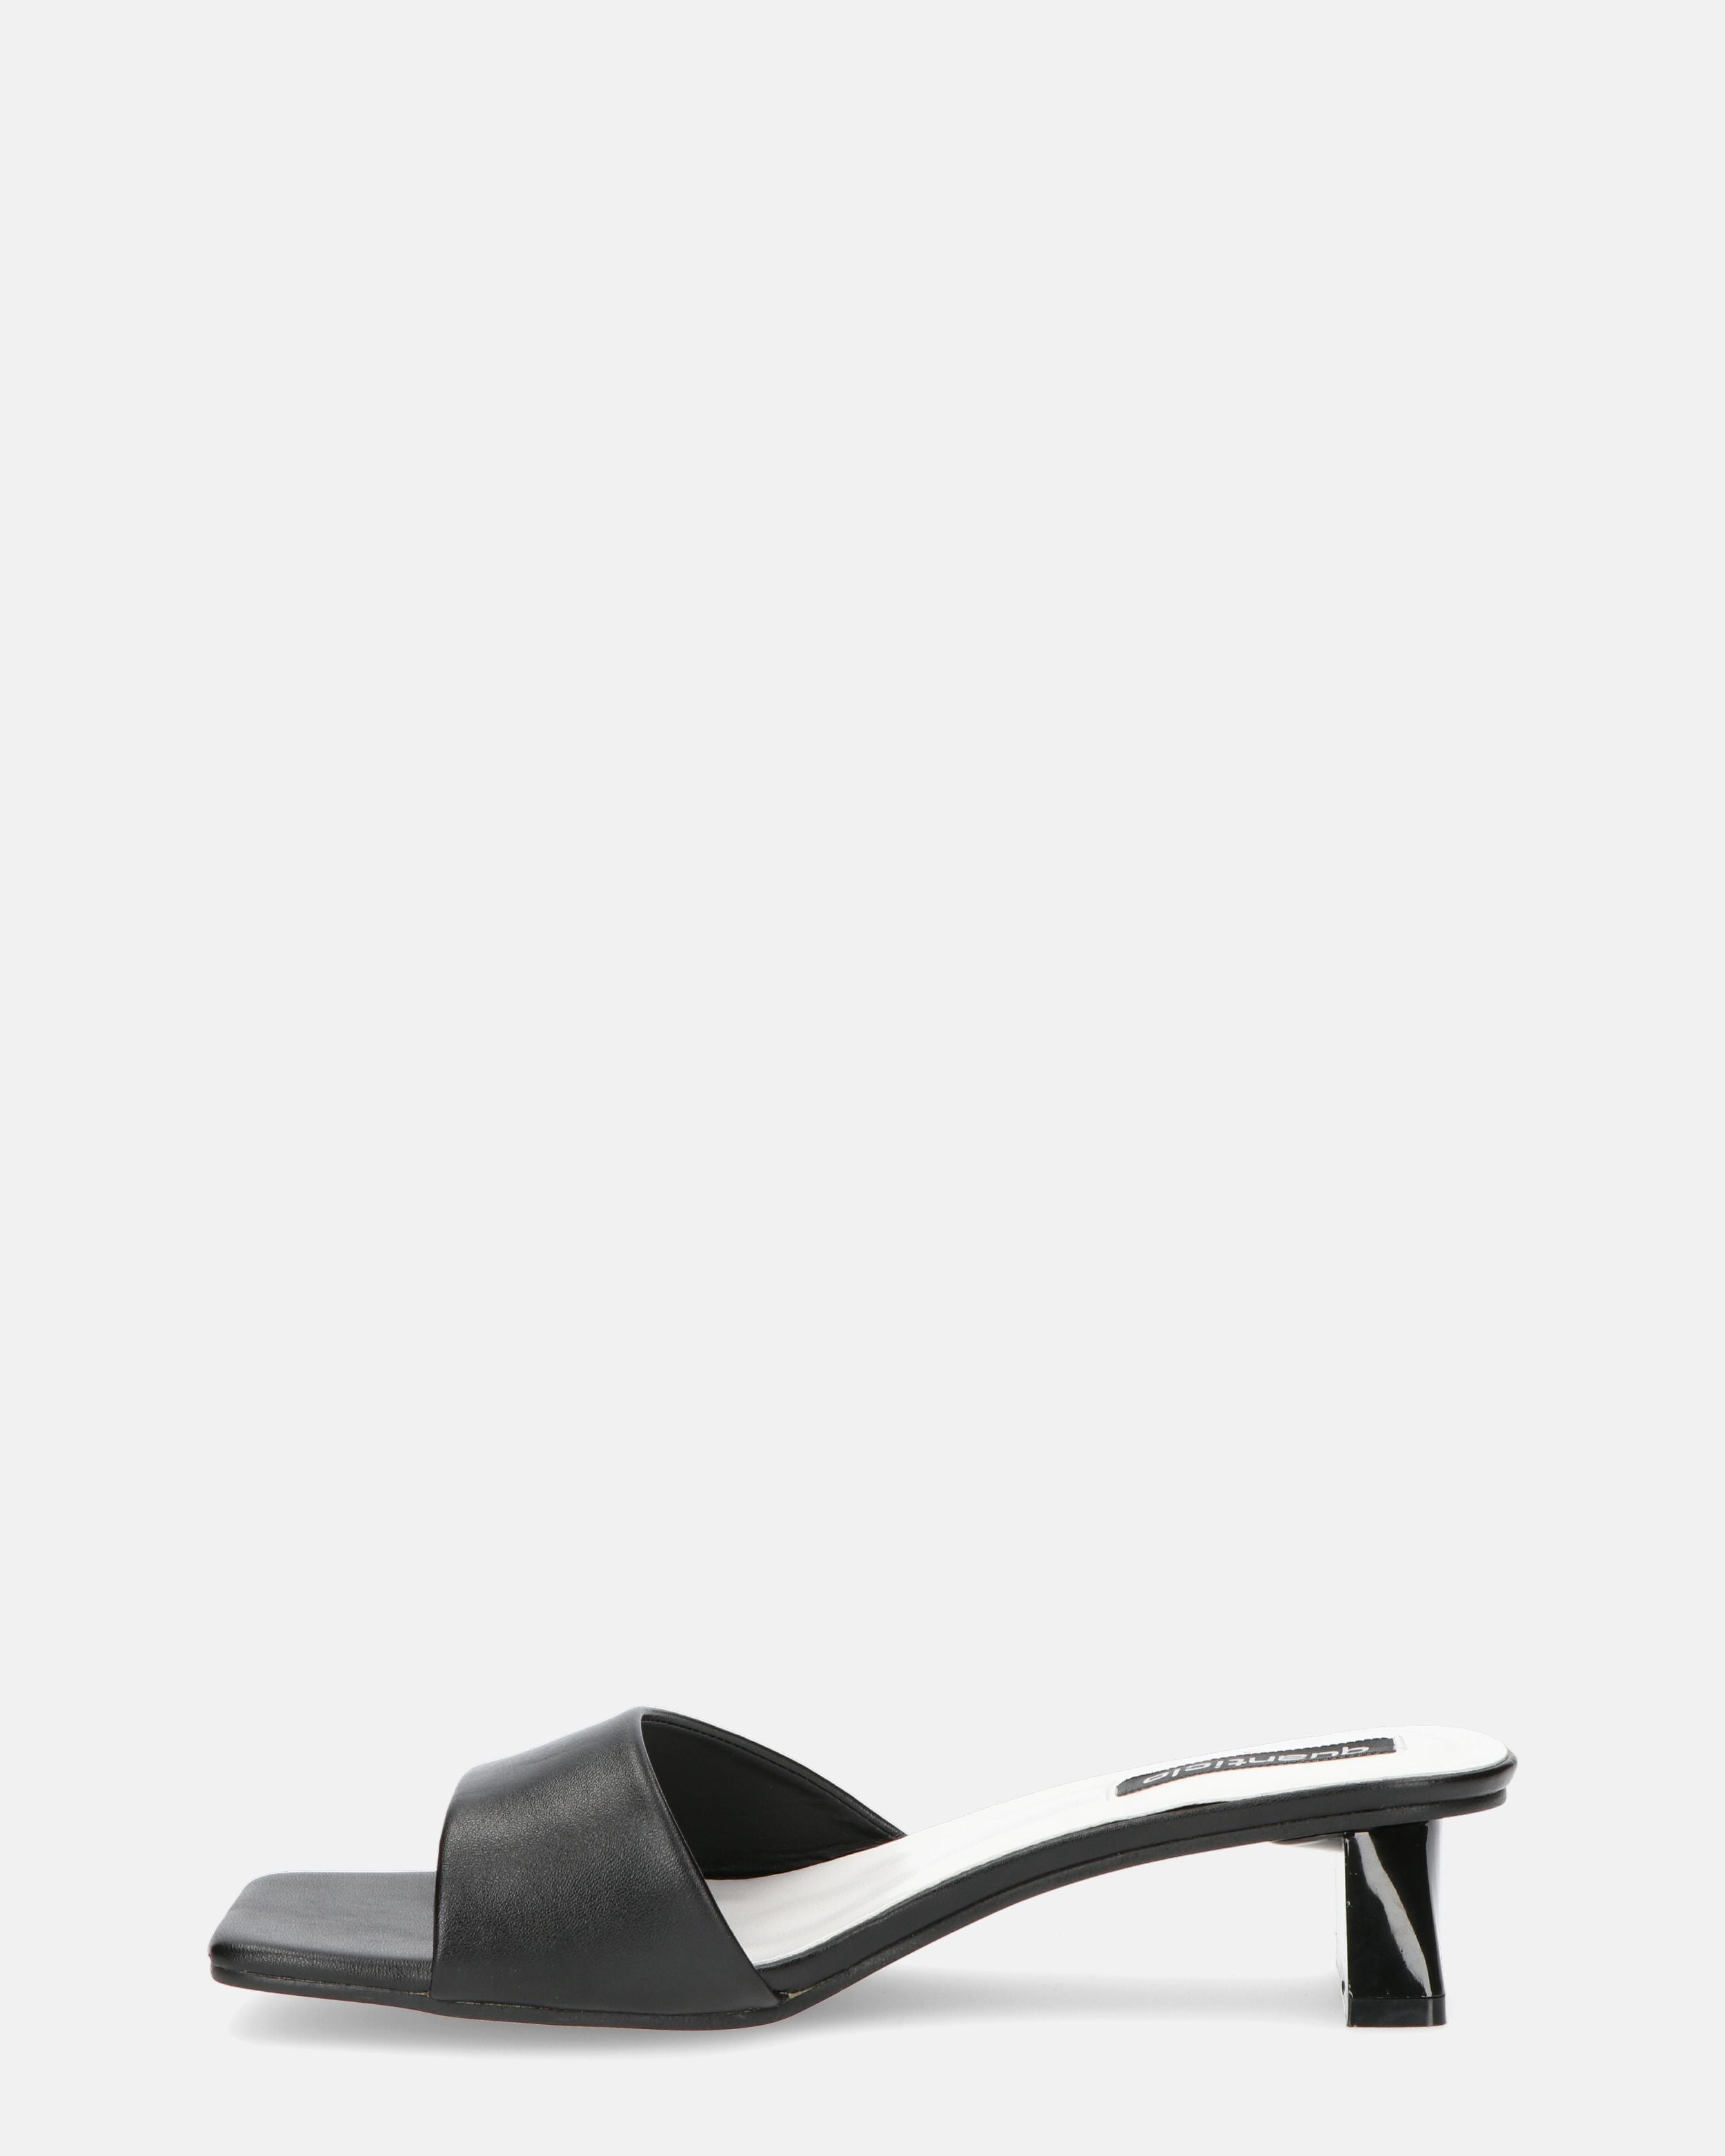 TITTI - sandalia de tacón en negro y blanco